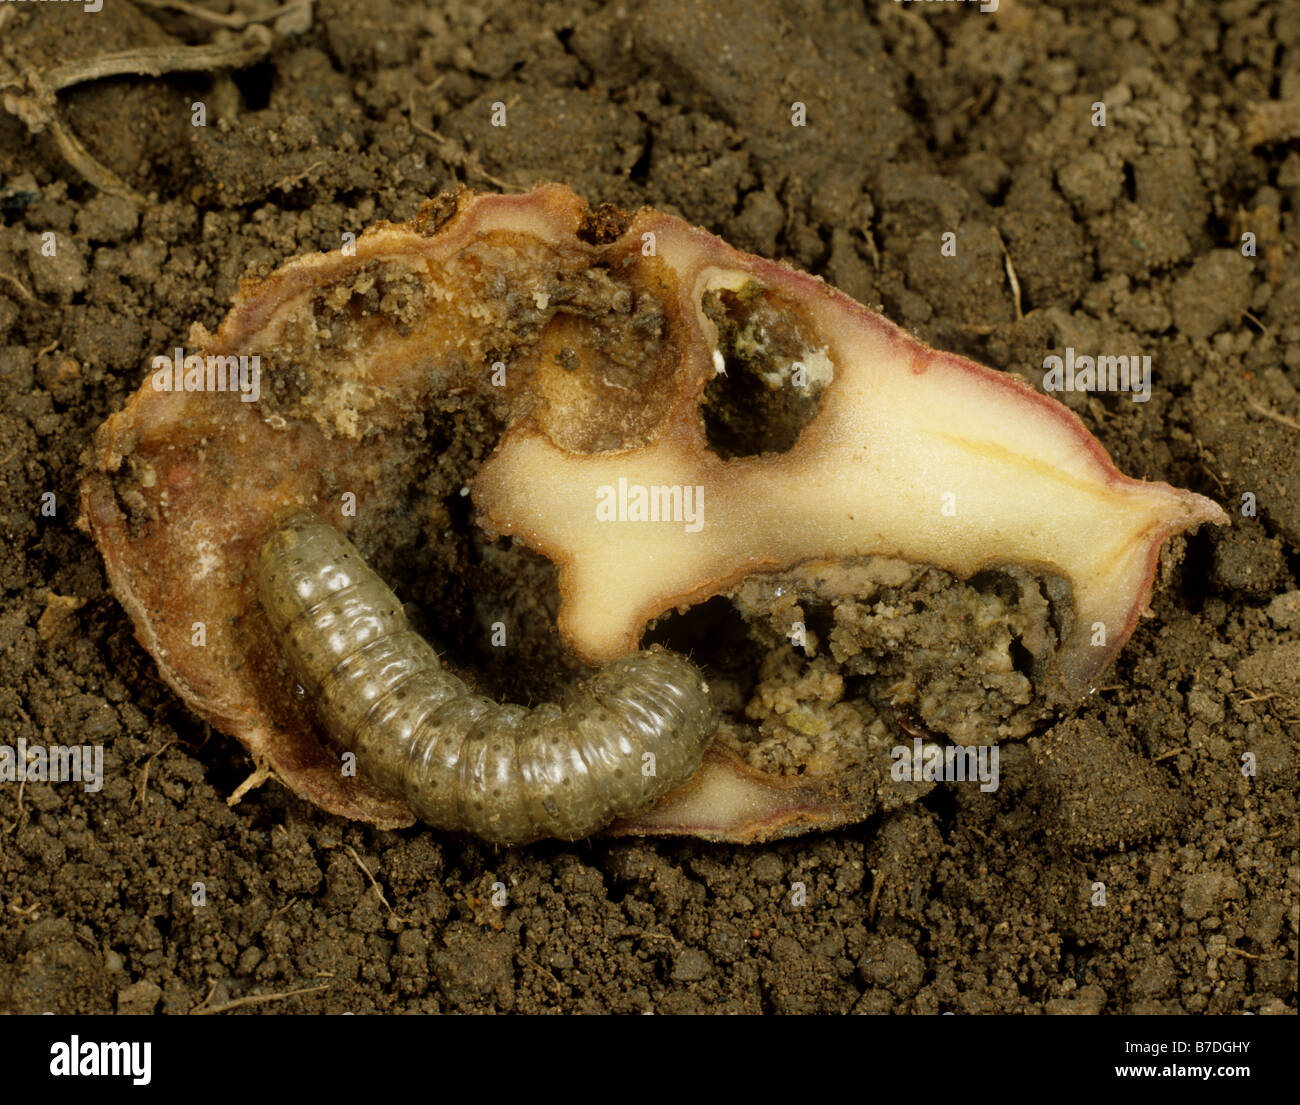 Turnip cutworm Agrotis segetum caterpillar in a damaged potato tuber Stock Photo